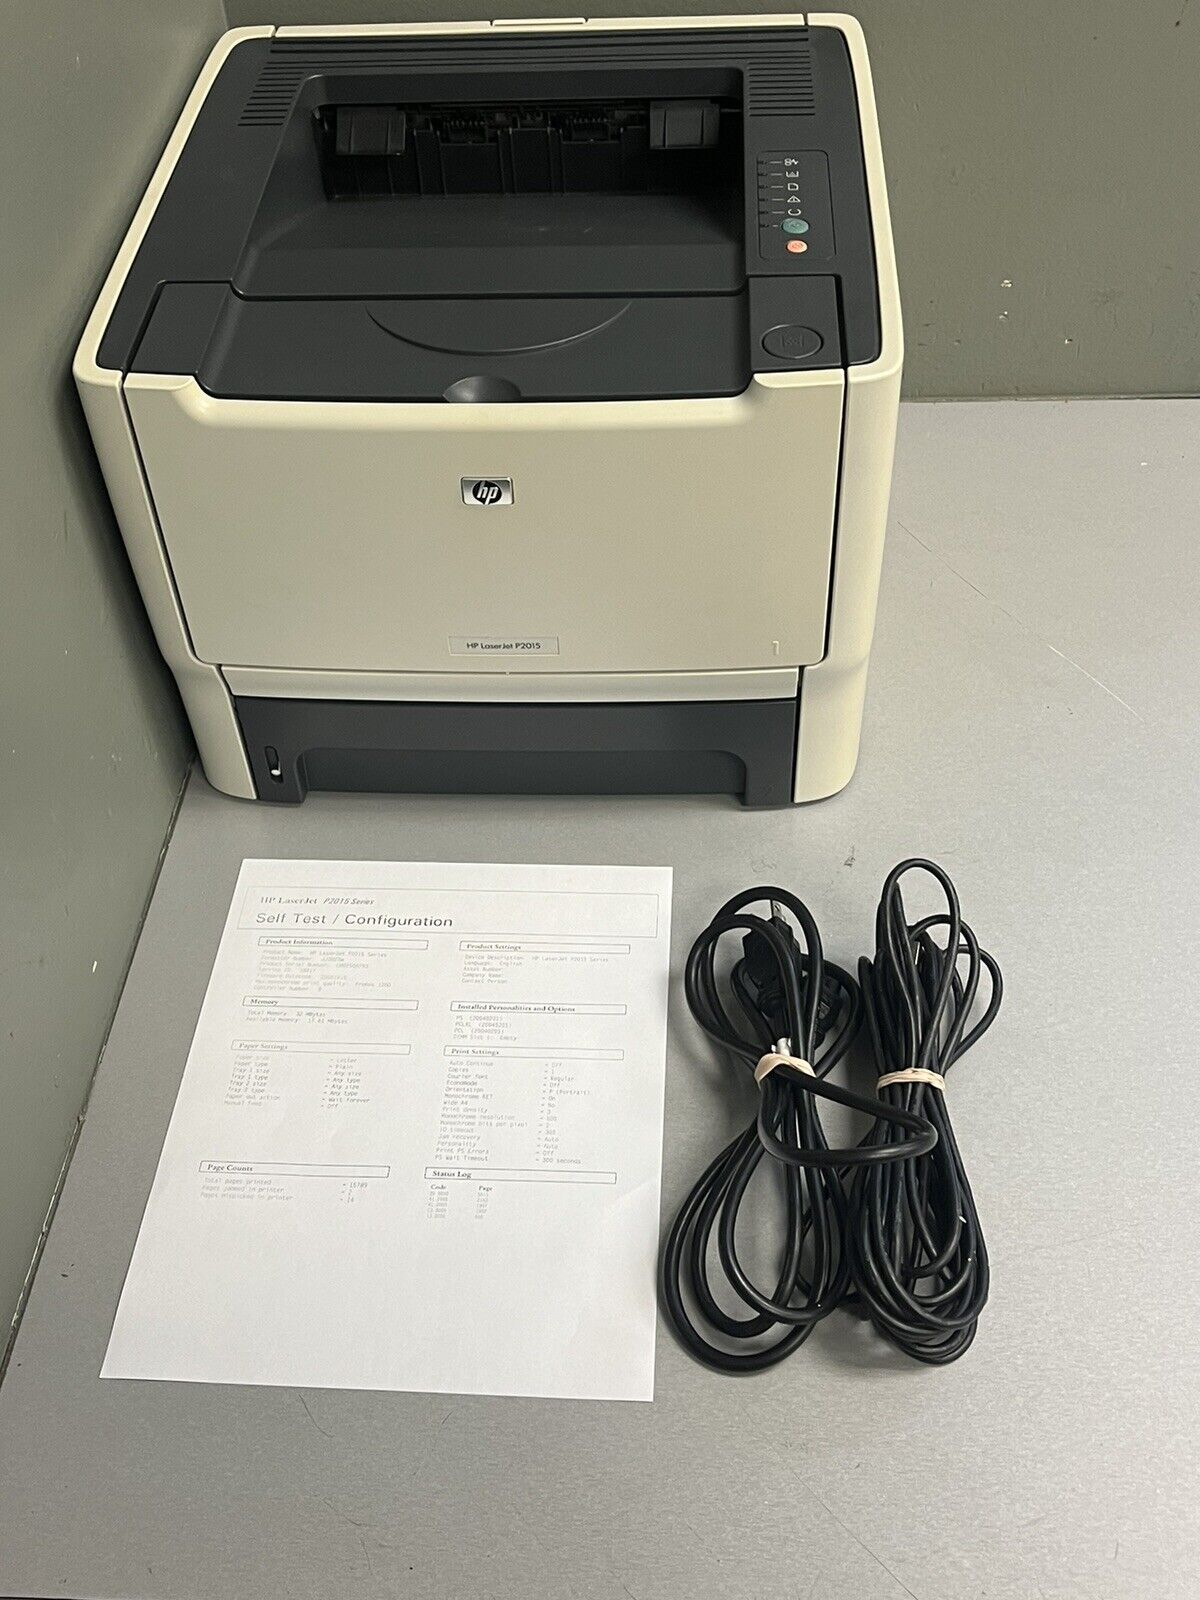 HP LaserJet P2015 Workgroup Monochrome Laser Printer w/ 15789 Printed Pages